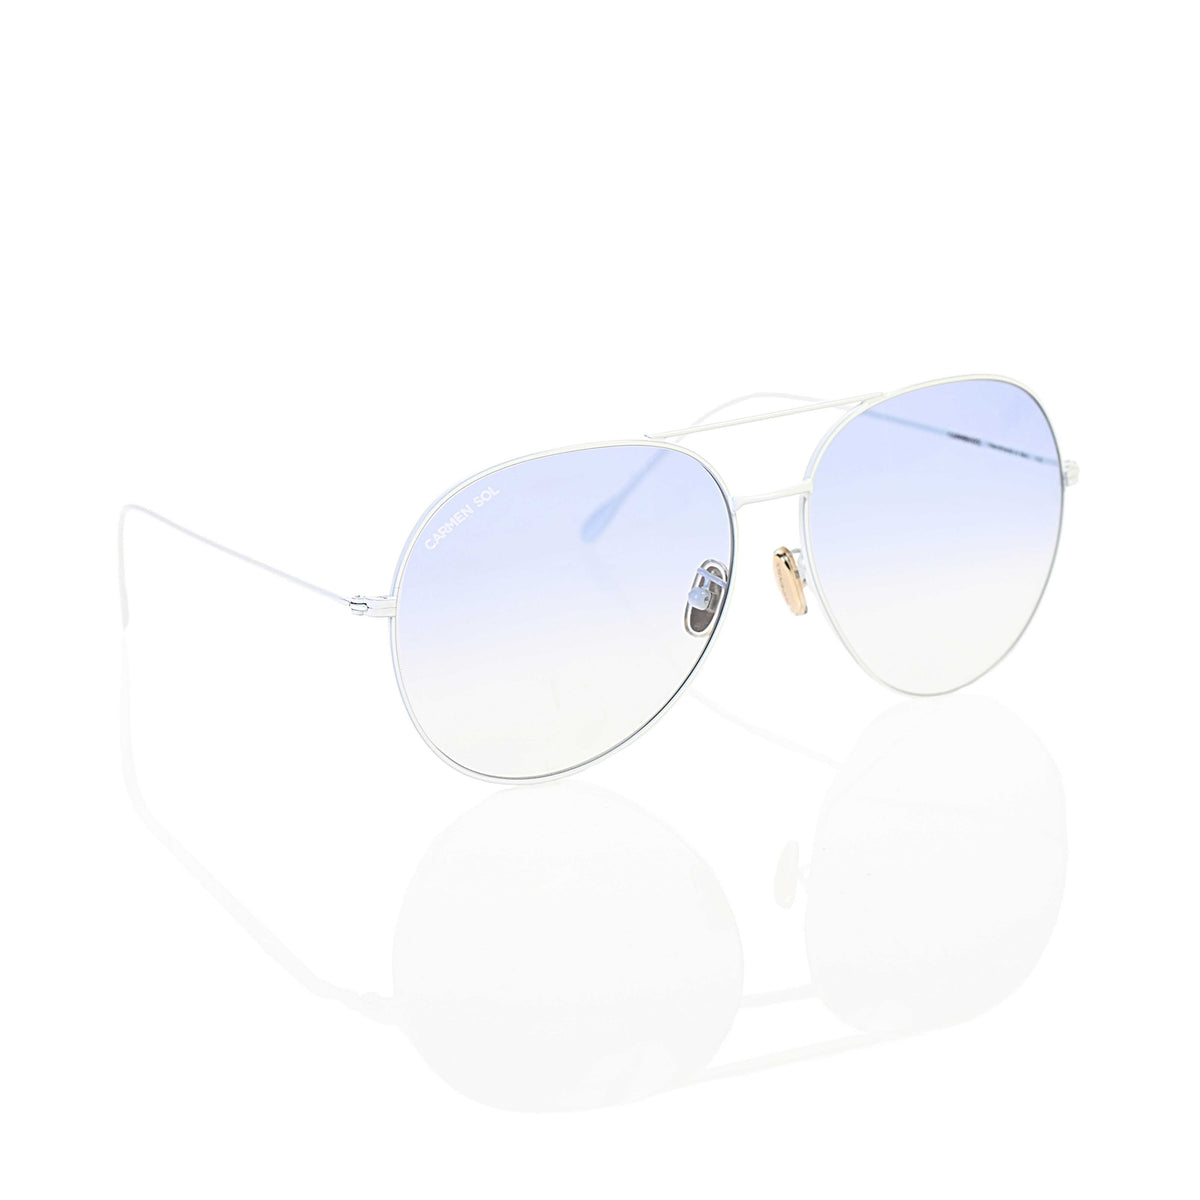 Blue shade white aviator sunglasses for women